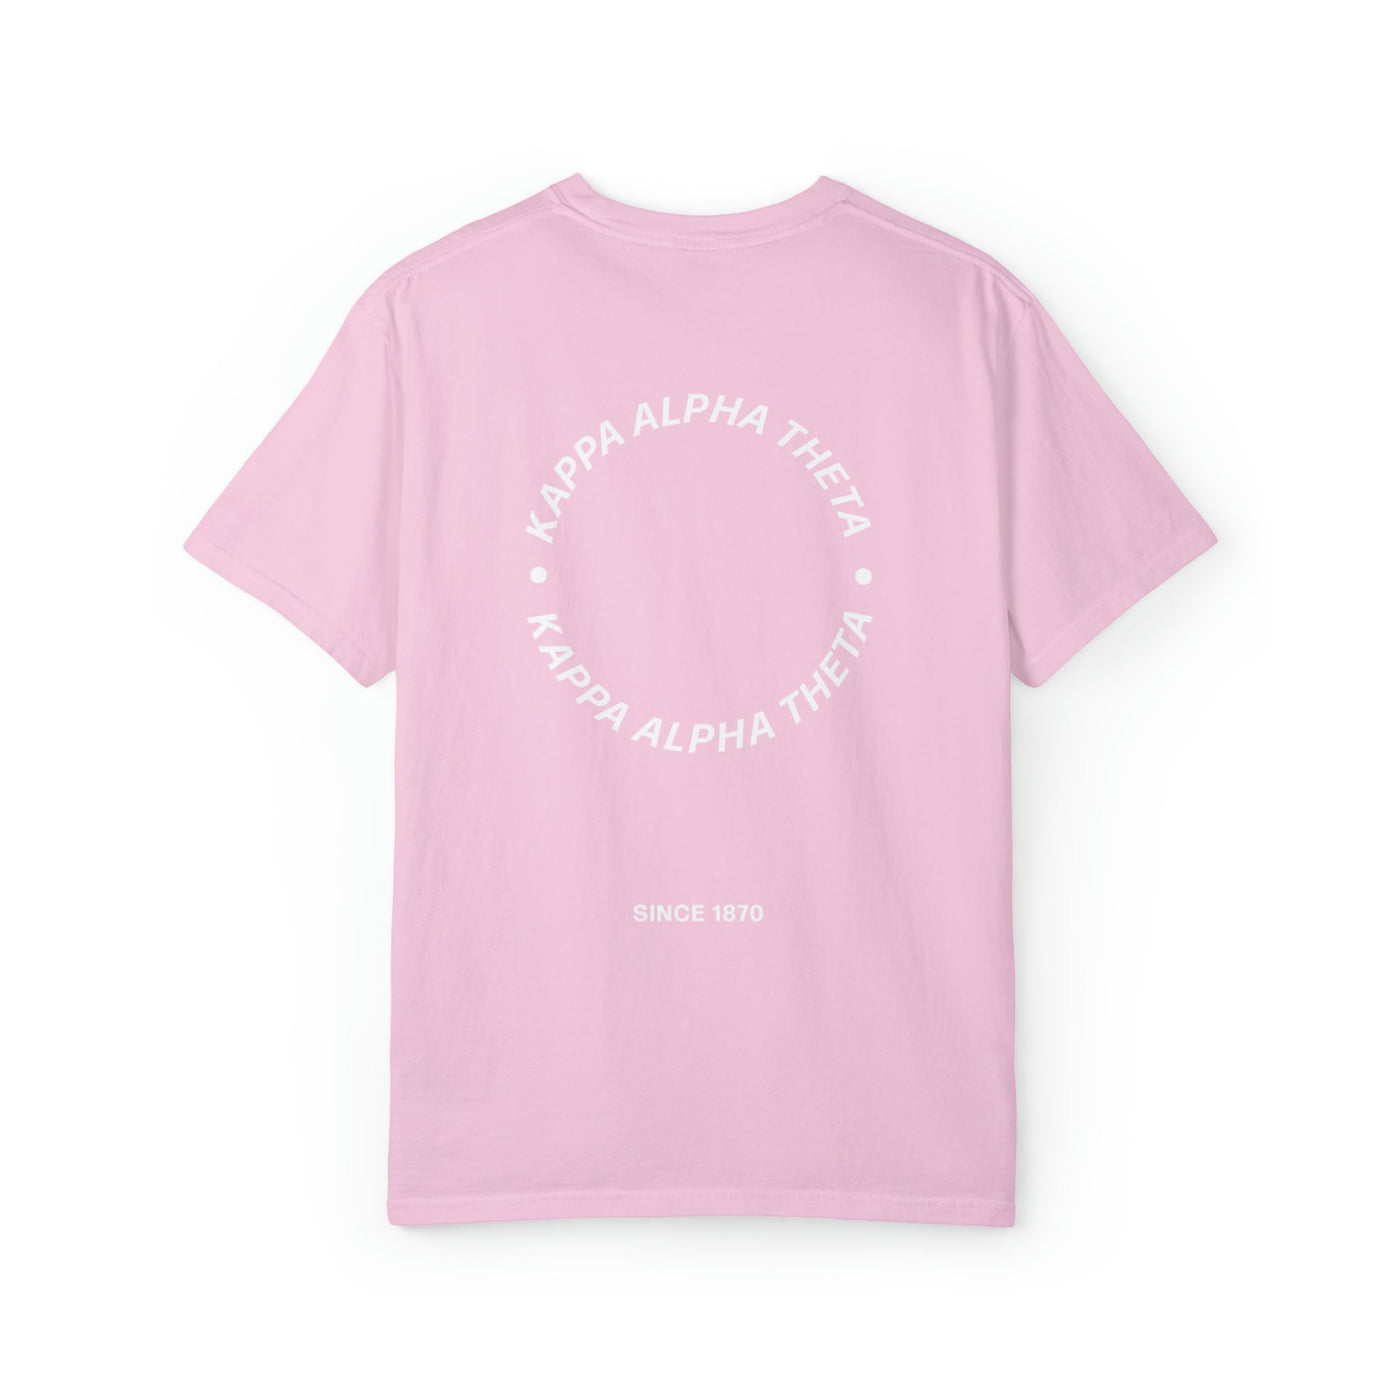 Kappa Alpha Theta Simple Circle Sorority T-shirt